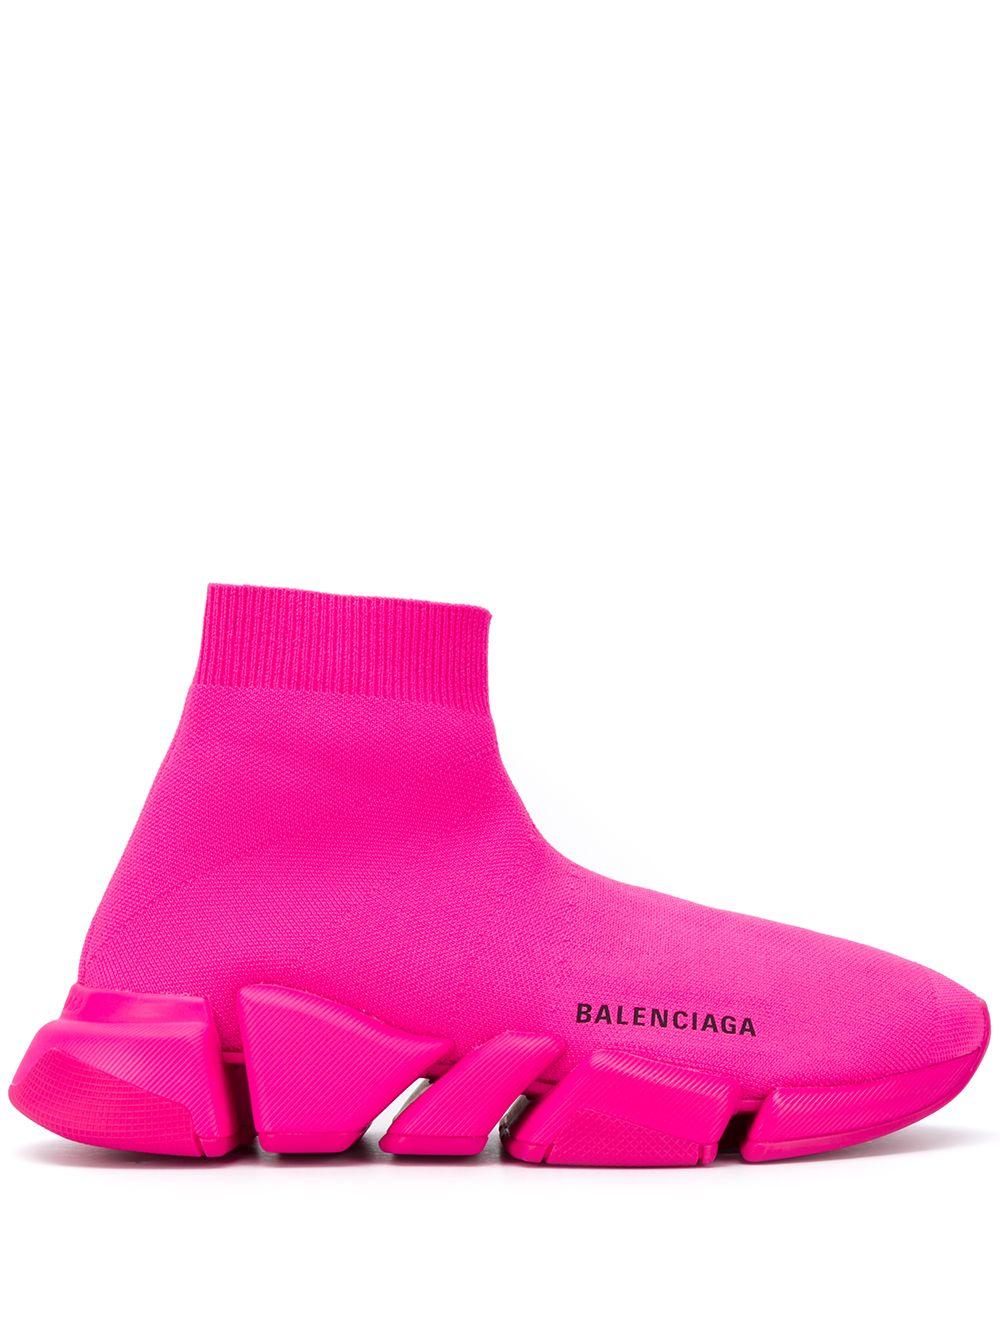 Balenciaga Slip-on Sock Sneakers in Pink | Lyst